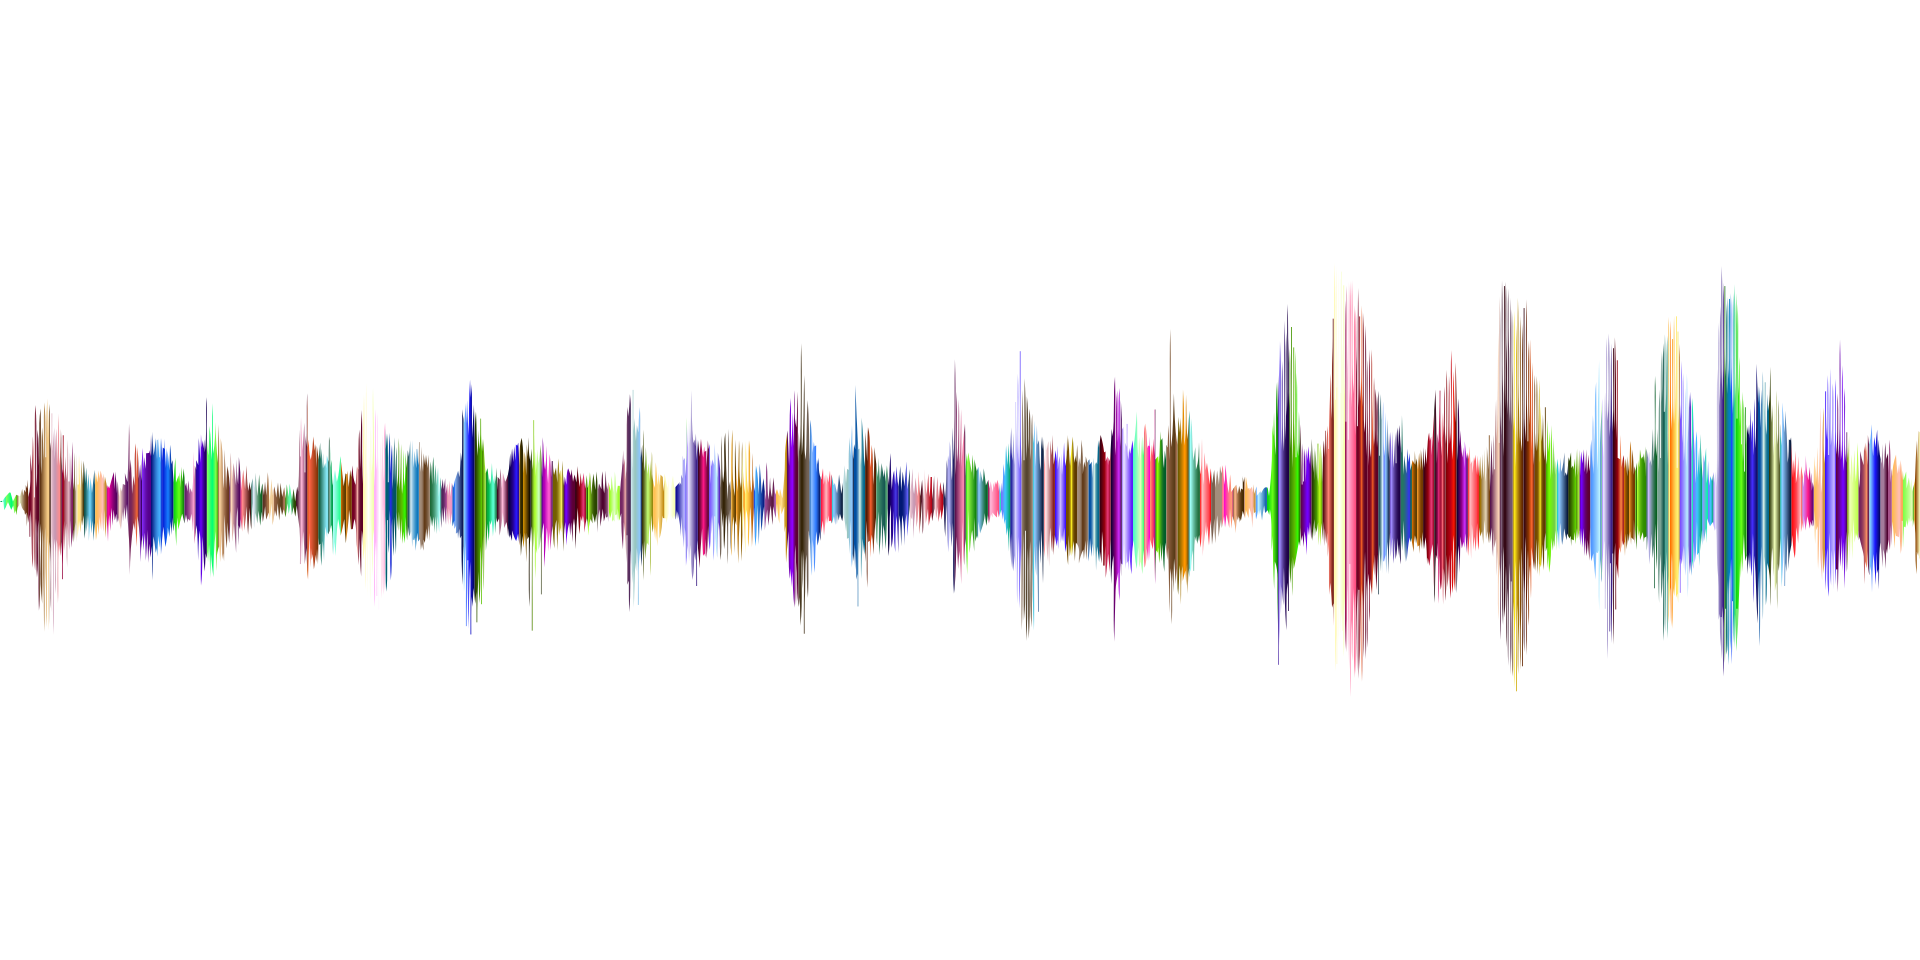 Soundwave spectrum 